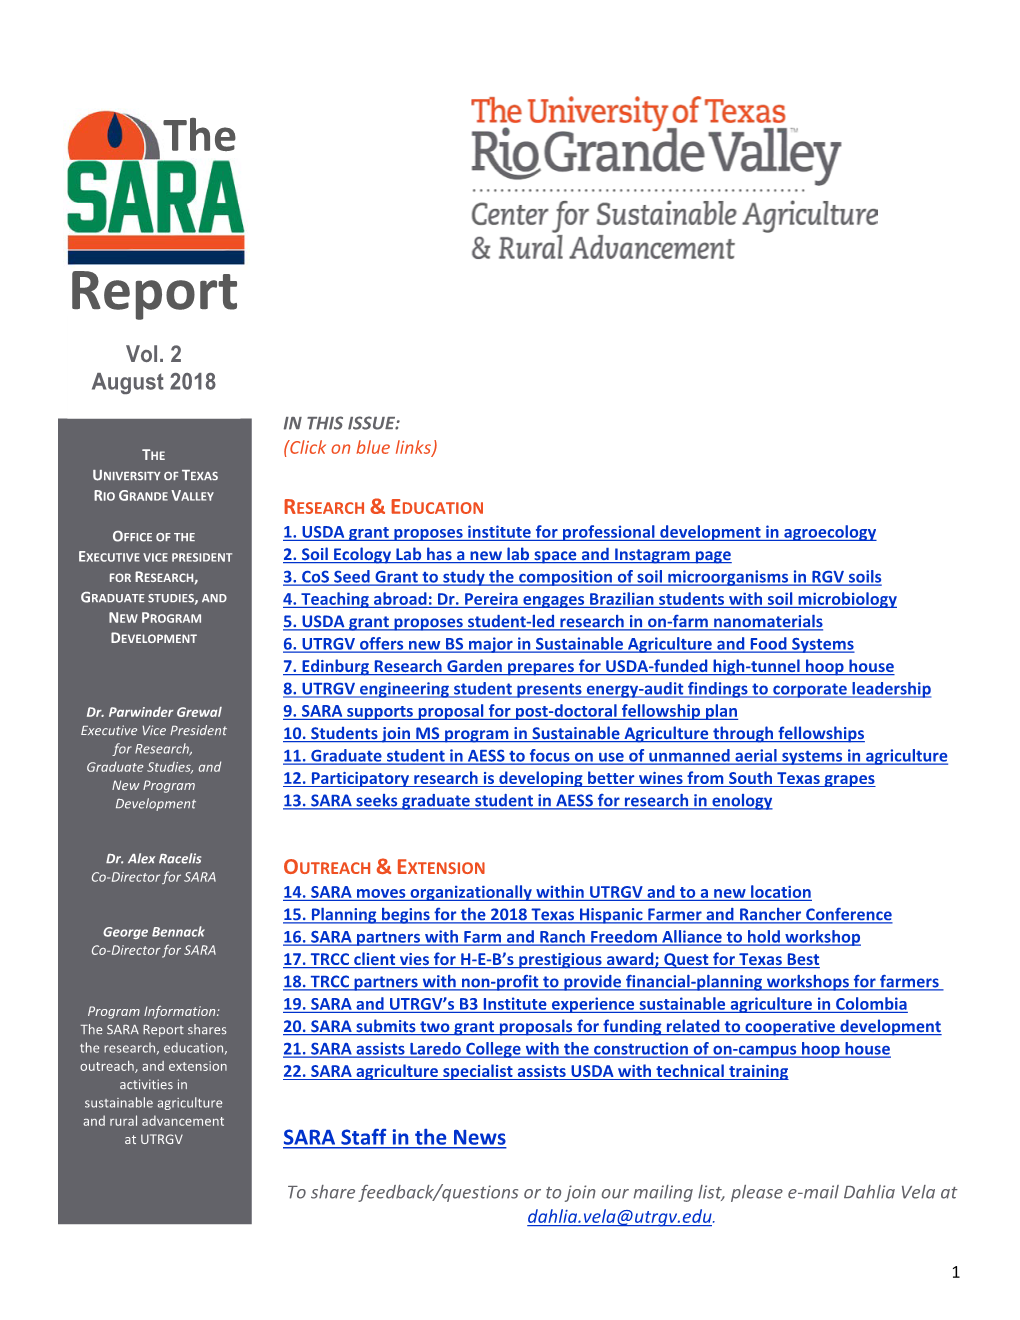 The SARA Report, Volume 2